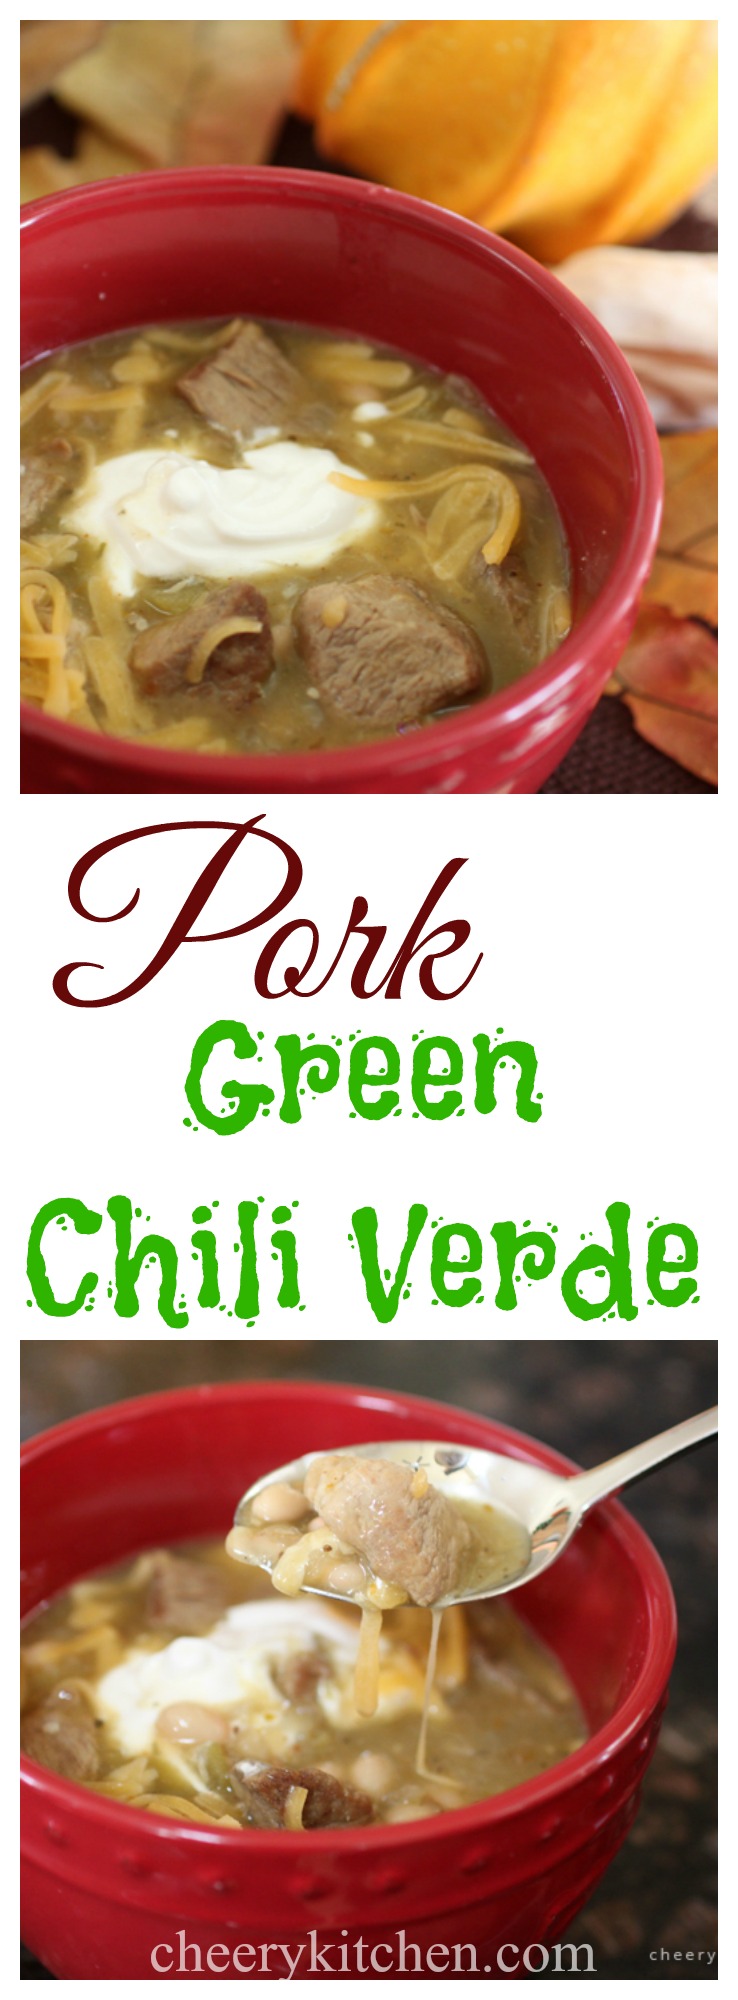 Pork Green Chili Verde